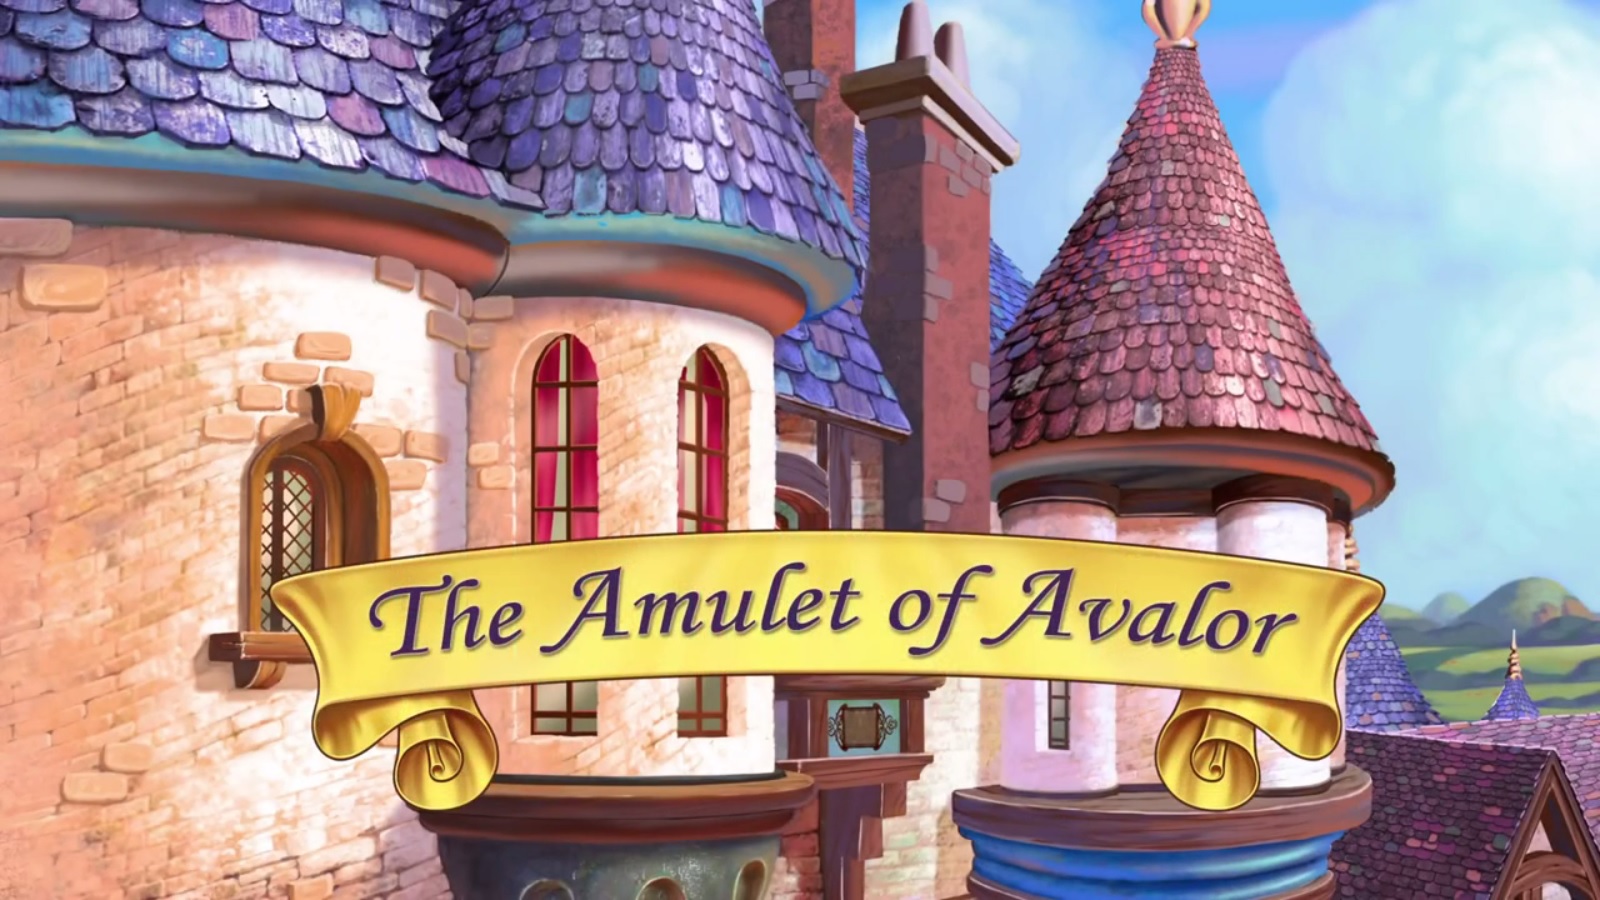 The Amulet Of Avalor Disney Wiki Fandom Powered By Wikia